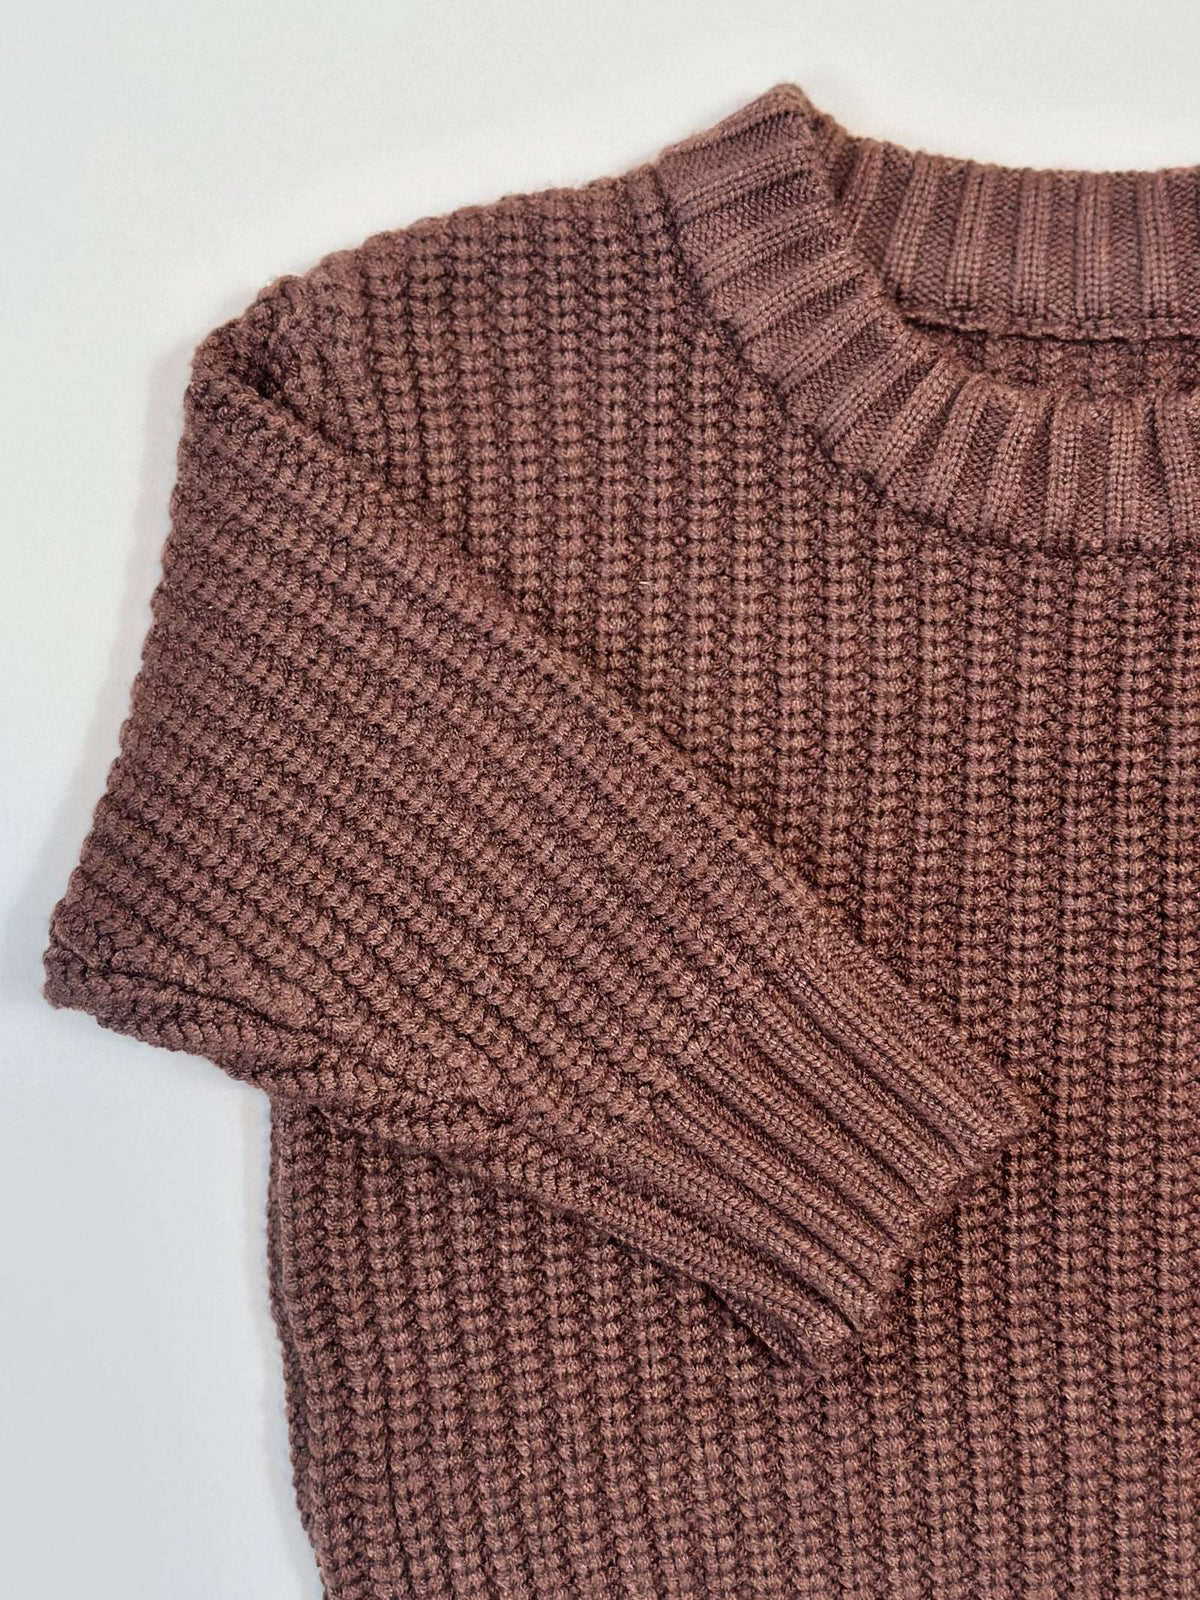 Roasted Walnut Sweater